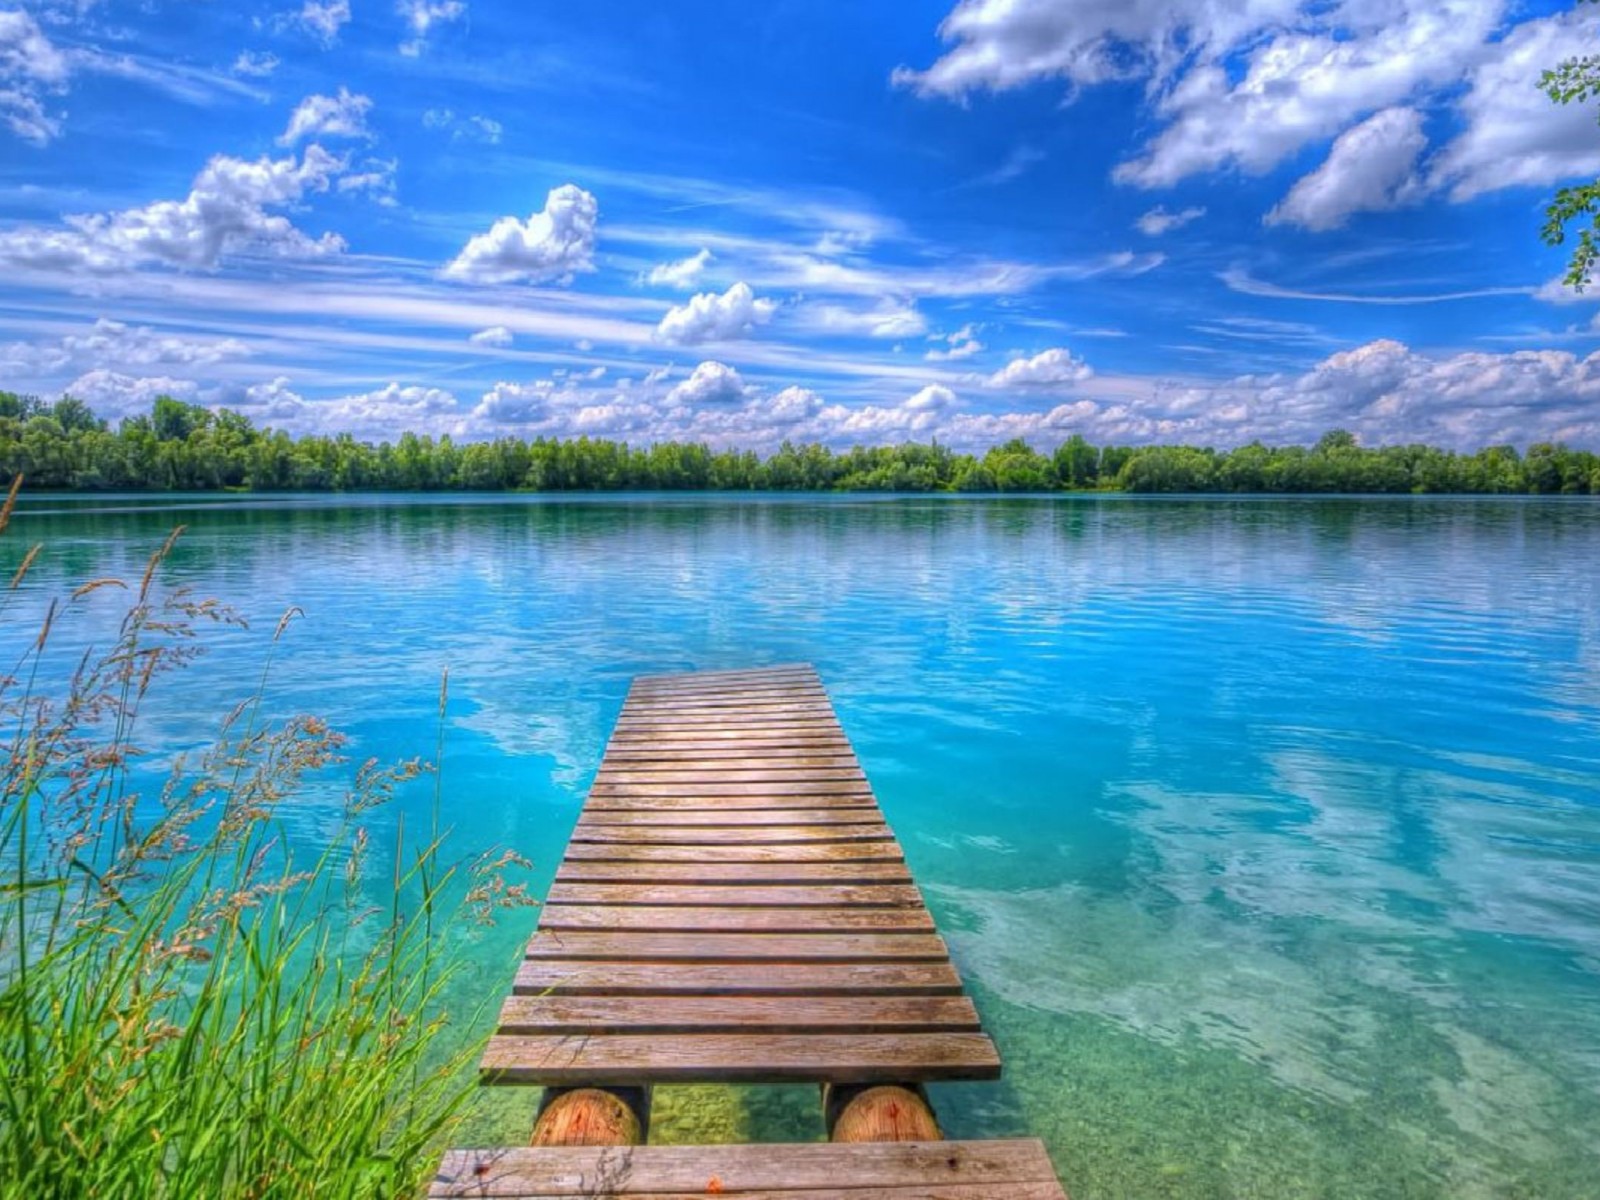 Background Beautiful Nature Lake Blue Sky With White